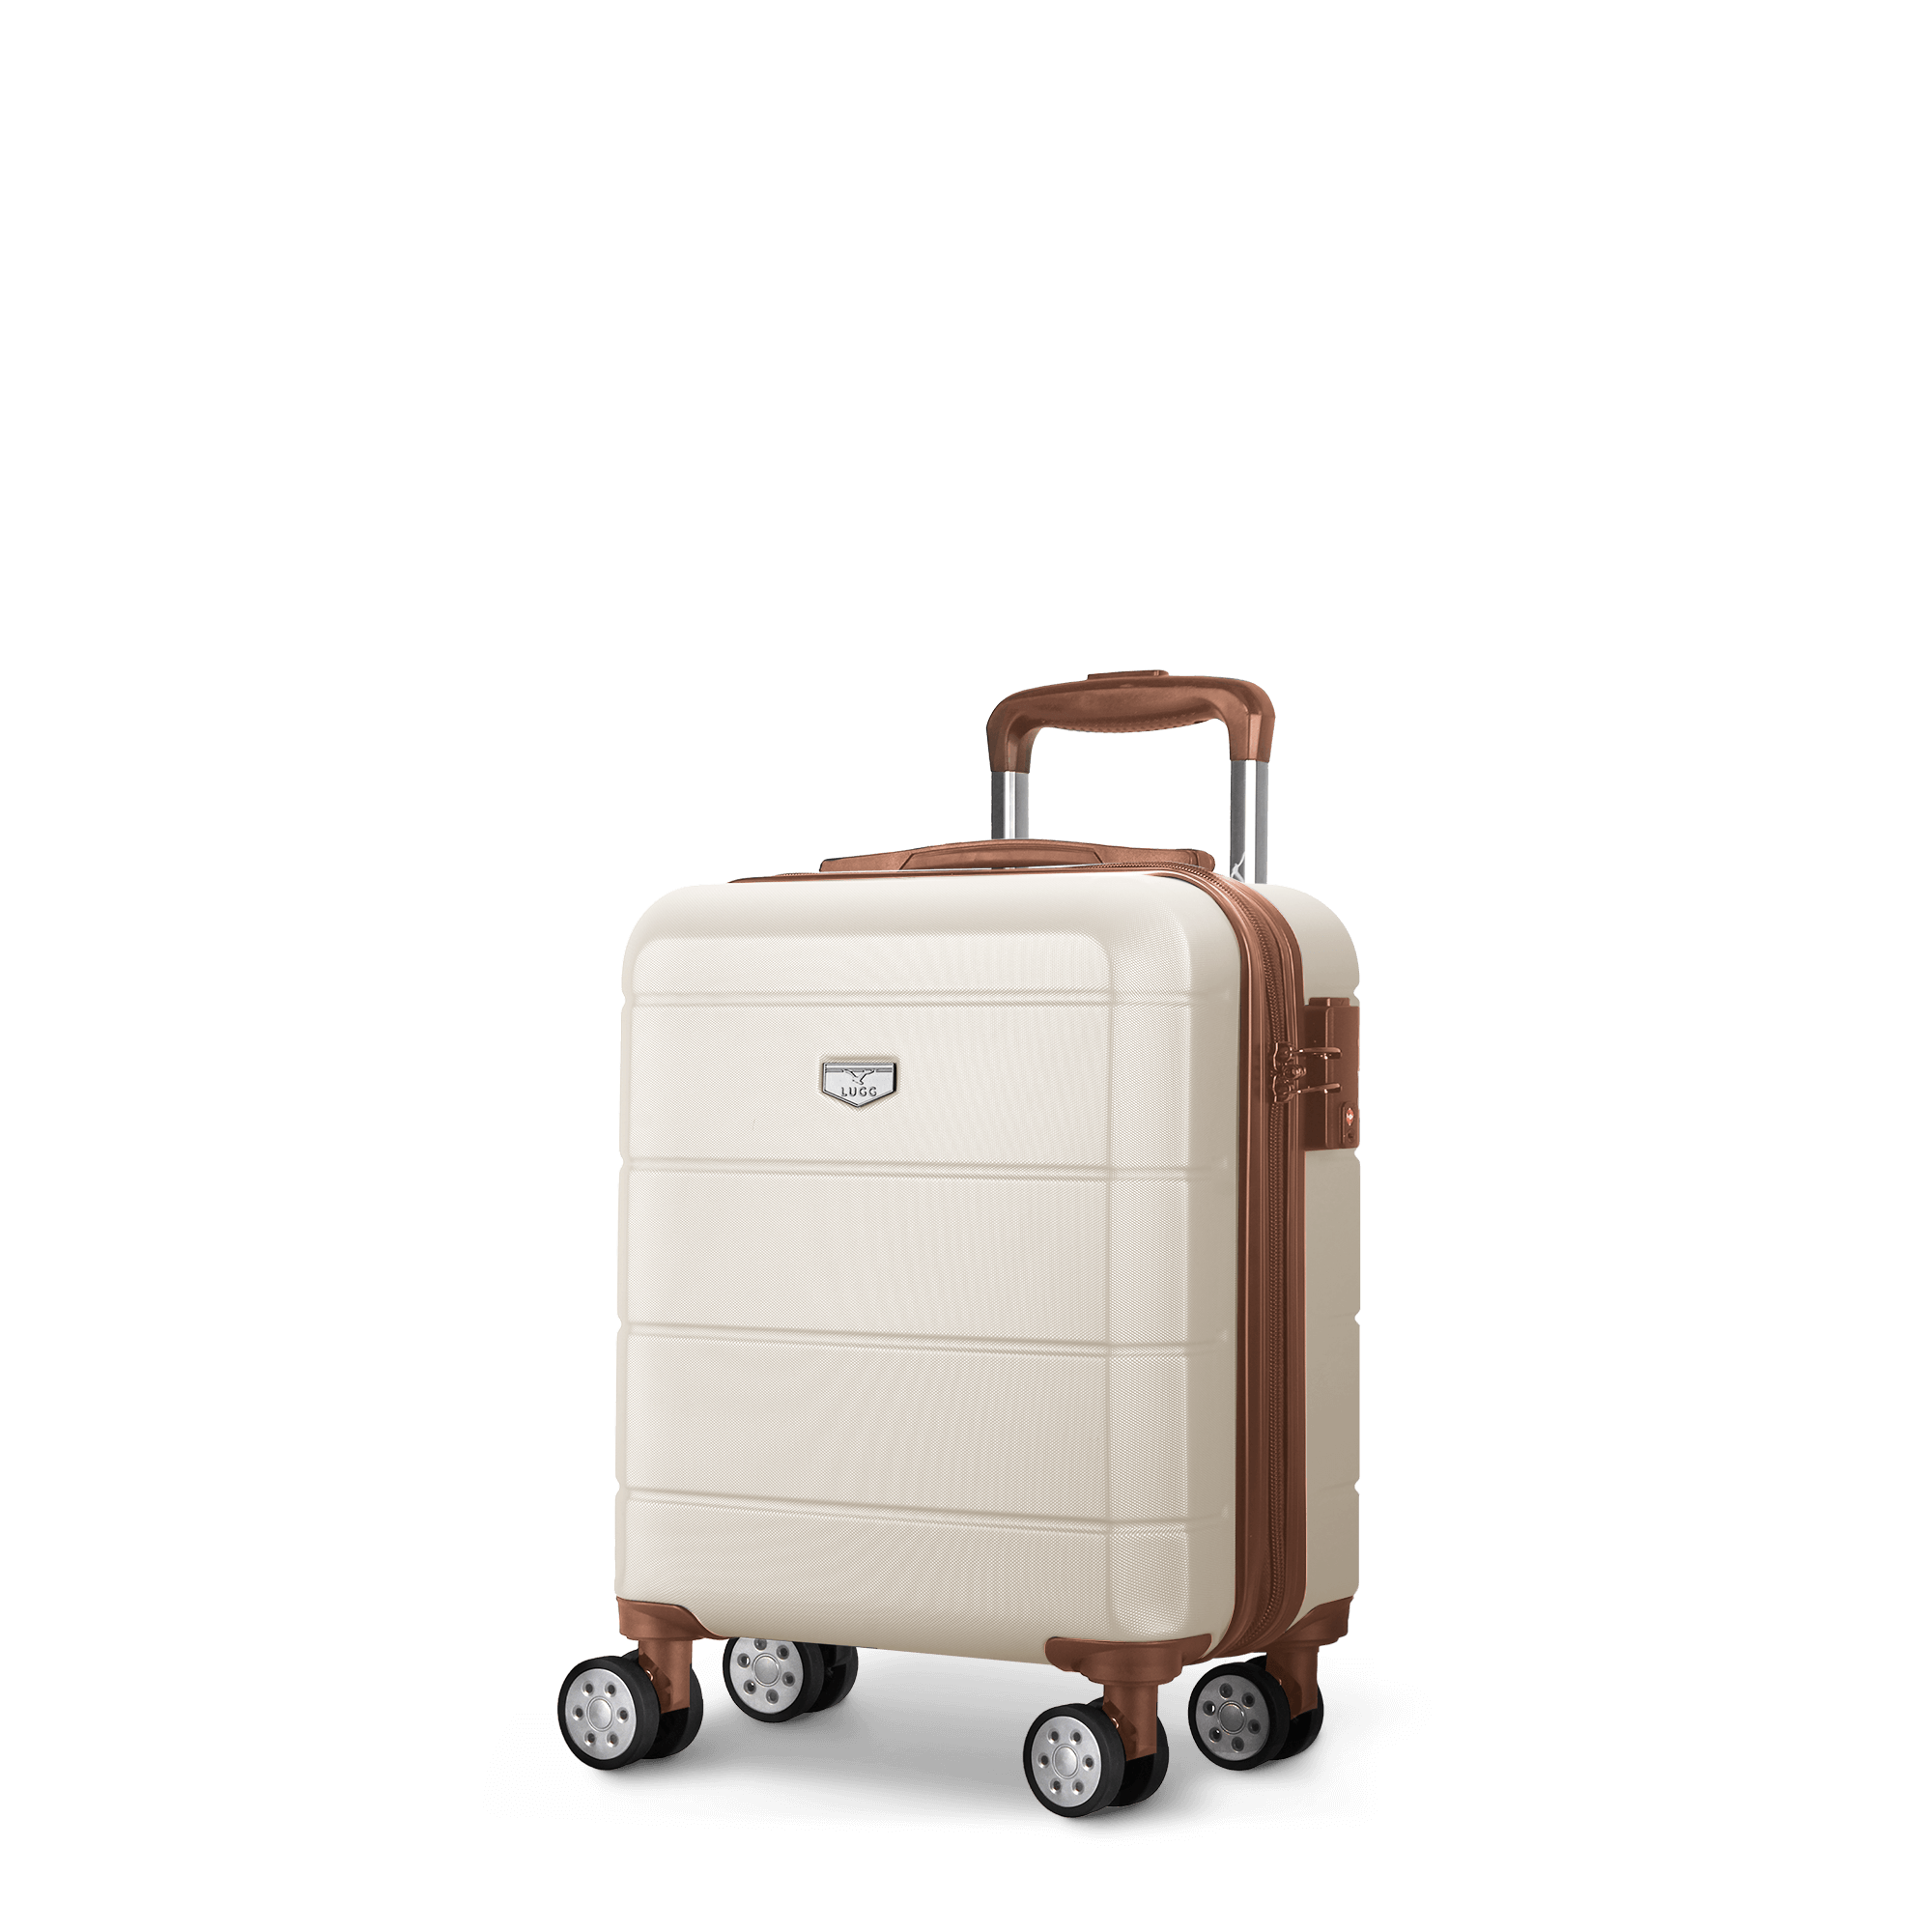 Jetset Cabin Suitcase in Cream & Brown